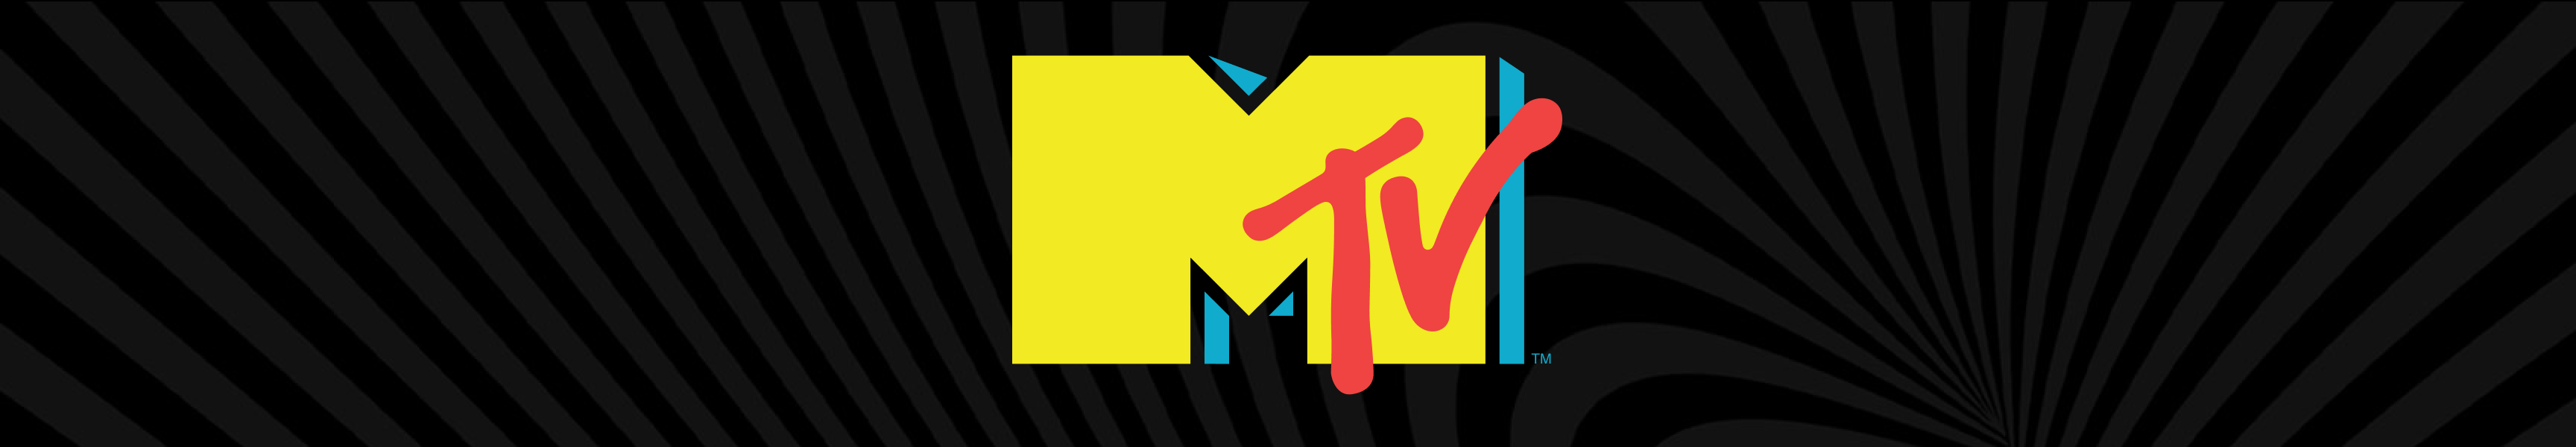 MTV Spring Break